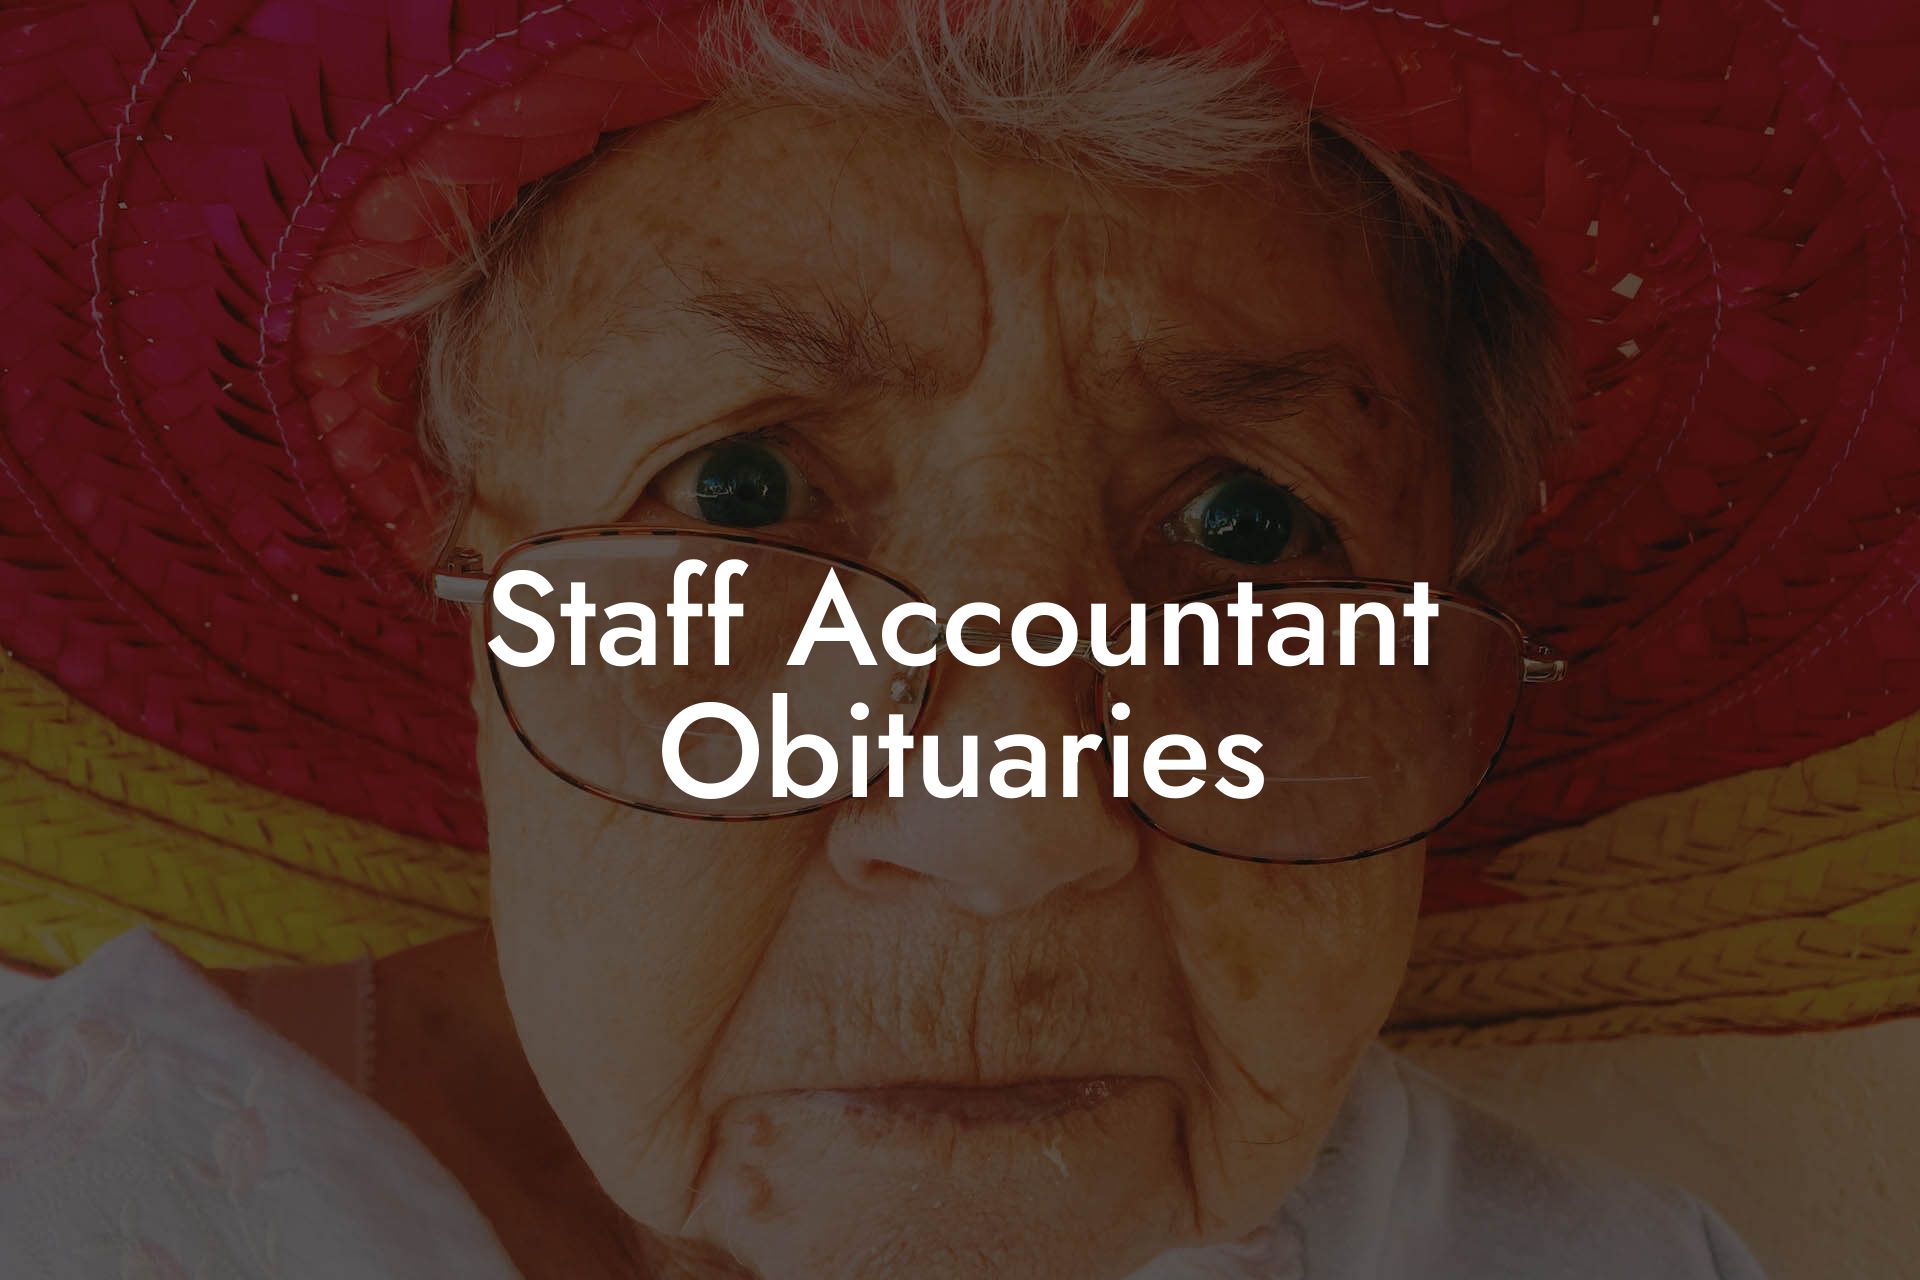 Staff Accountant Obituaries